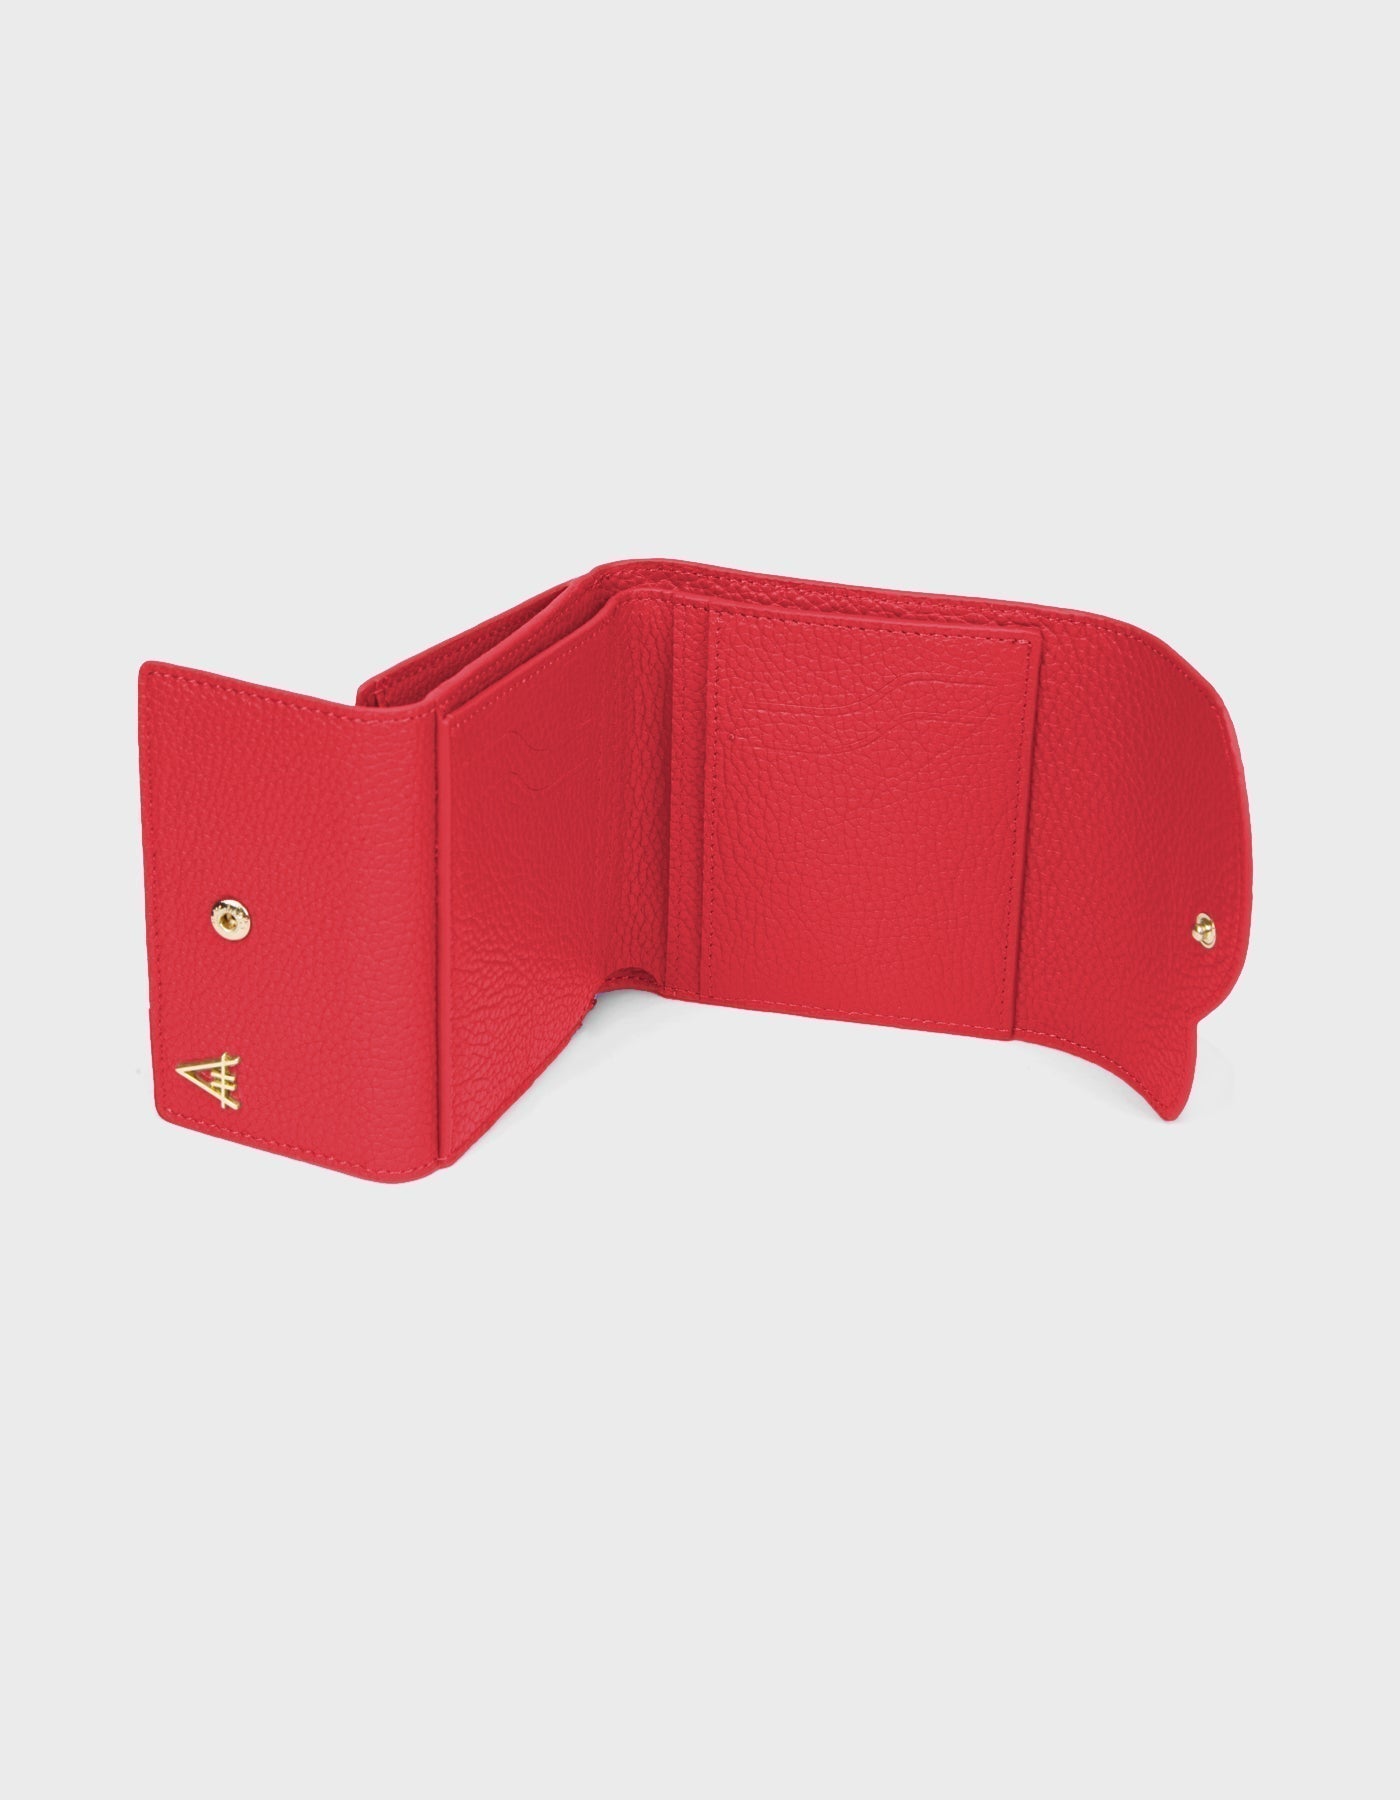 HiVa Atelier | Larus Compact Wallet Red | Beautiful and Versatile